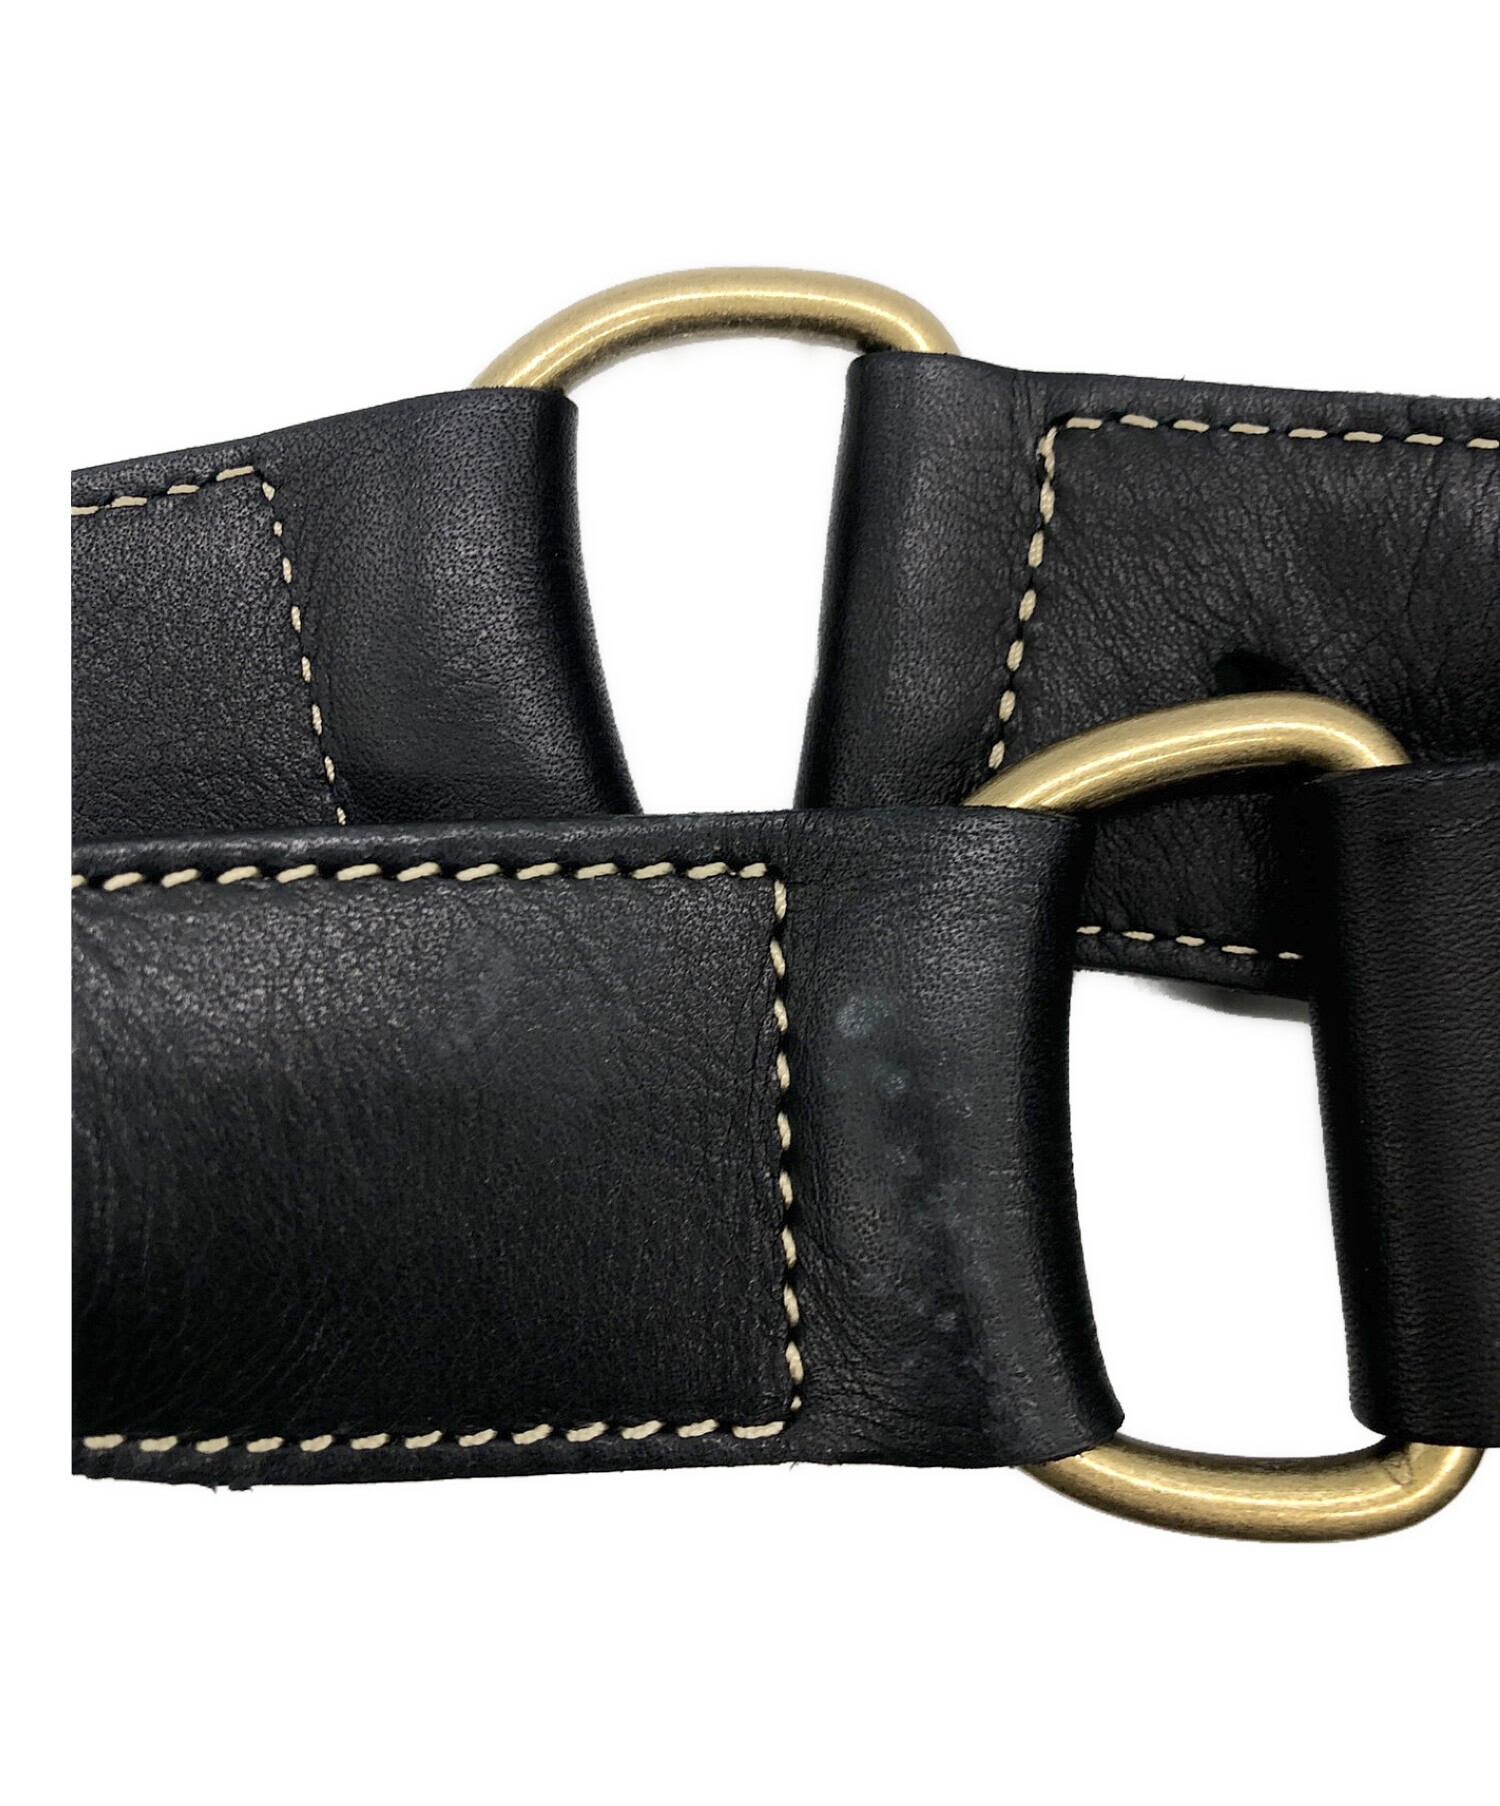 Vivienne Westwood accessories (ヴィヴィアン ウエストウッド アクセサリー) オーブエンボスミニボストンバッグ ブラック